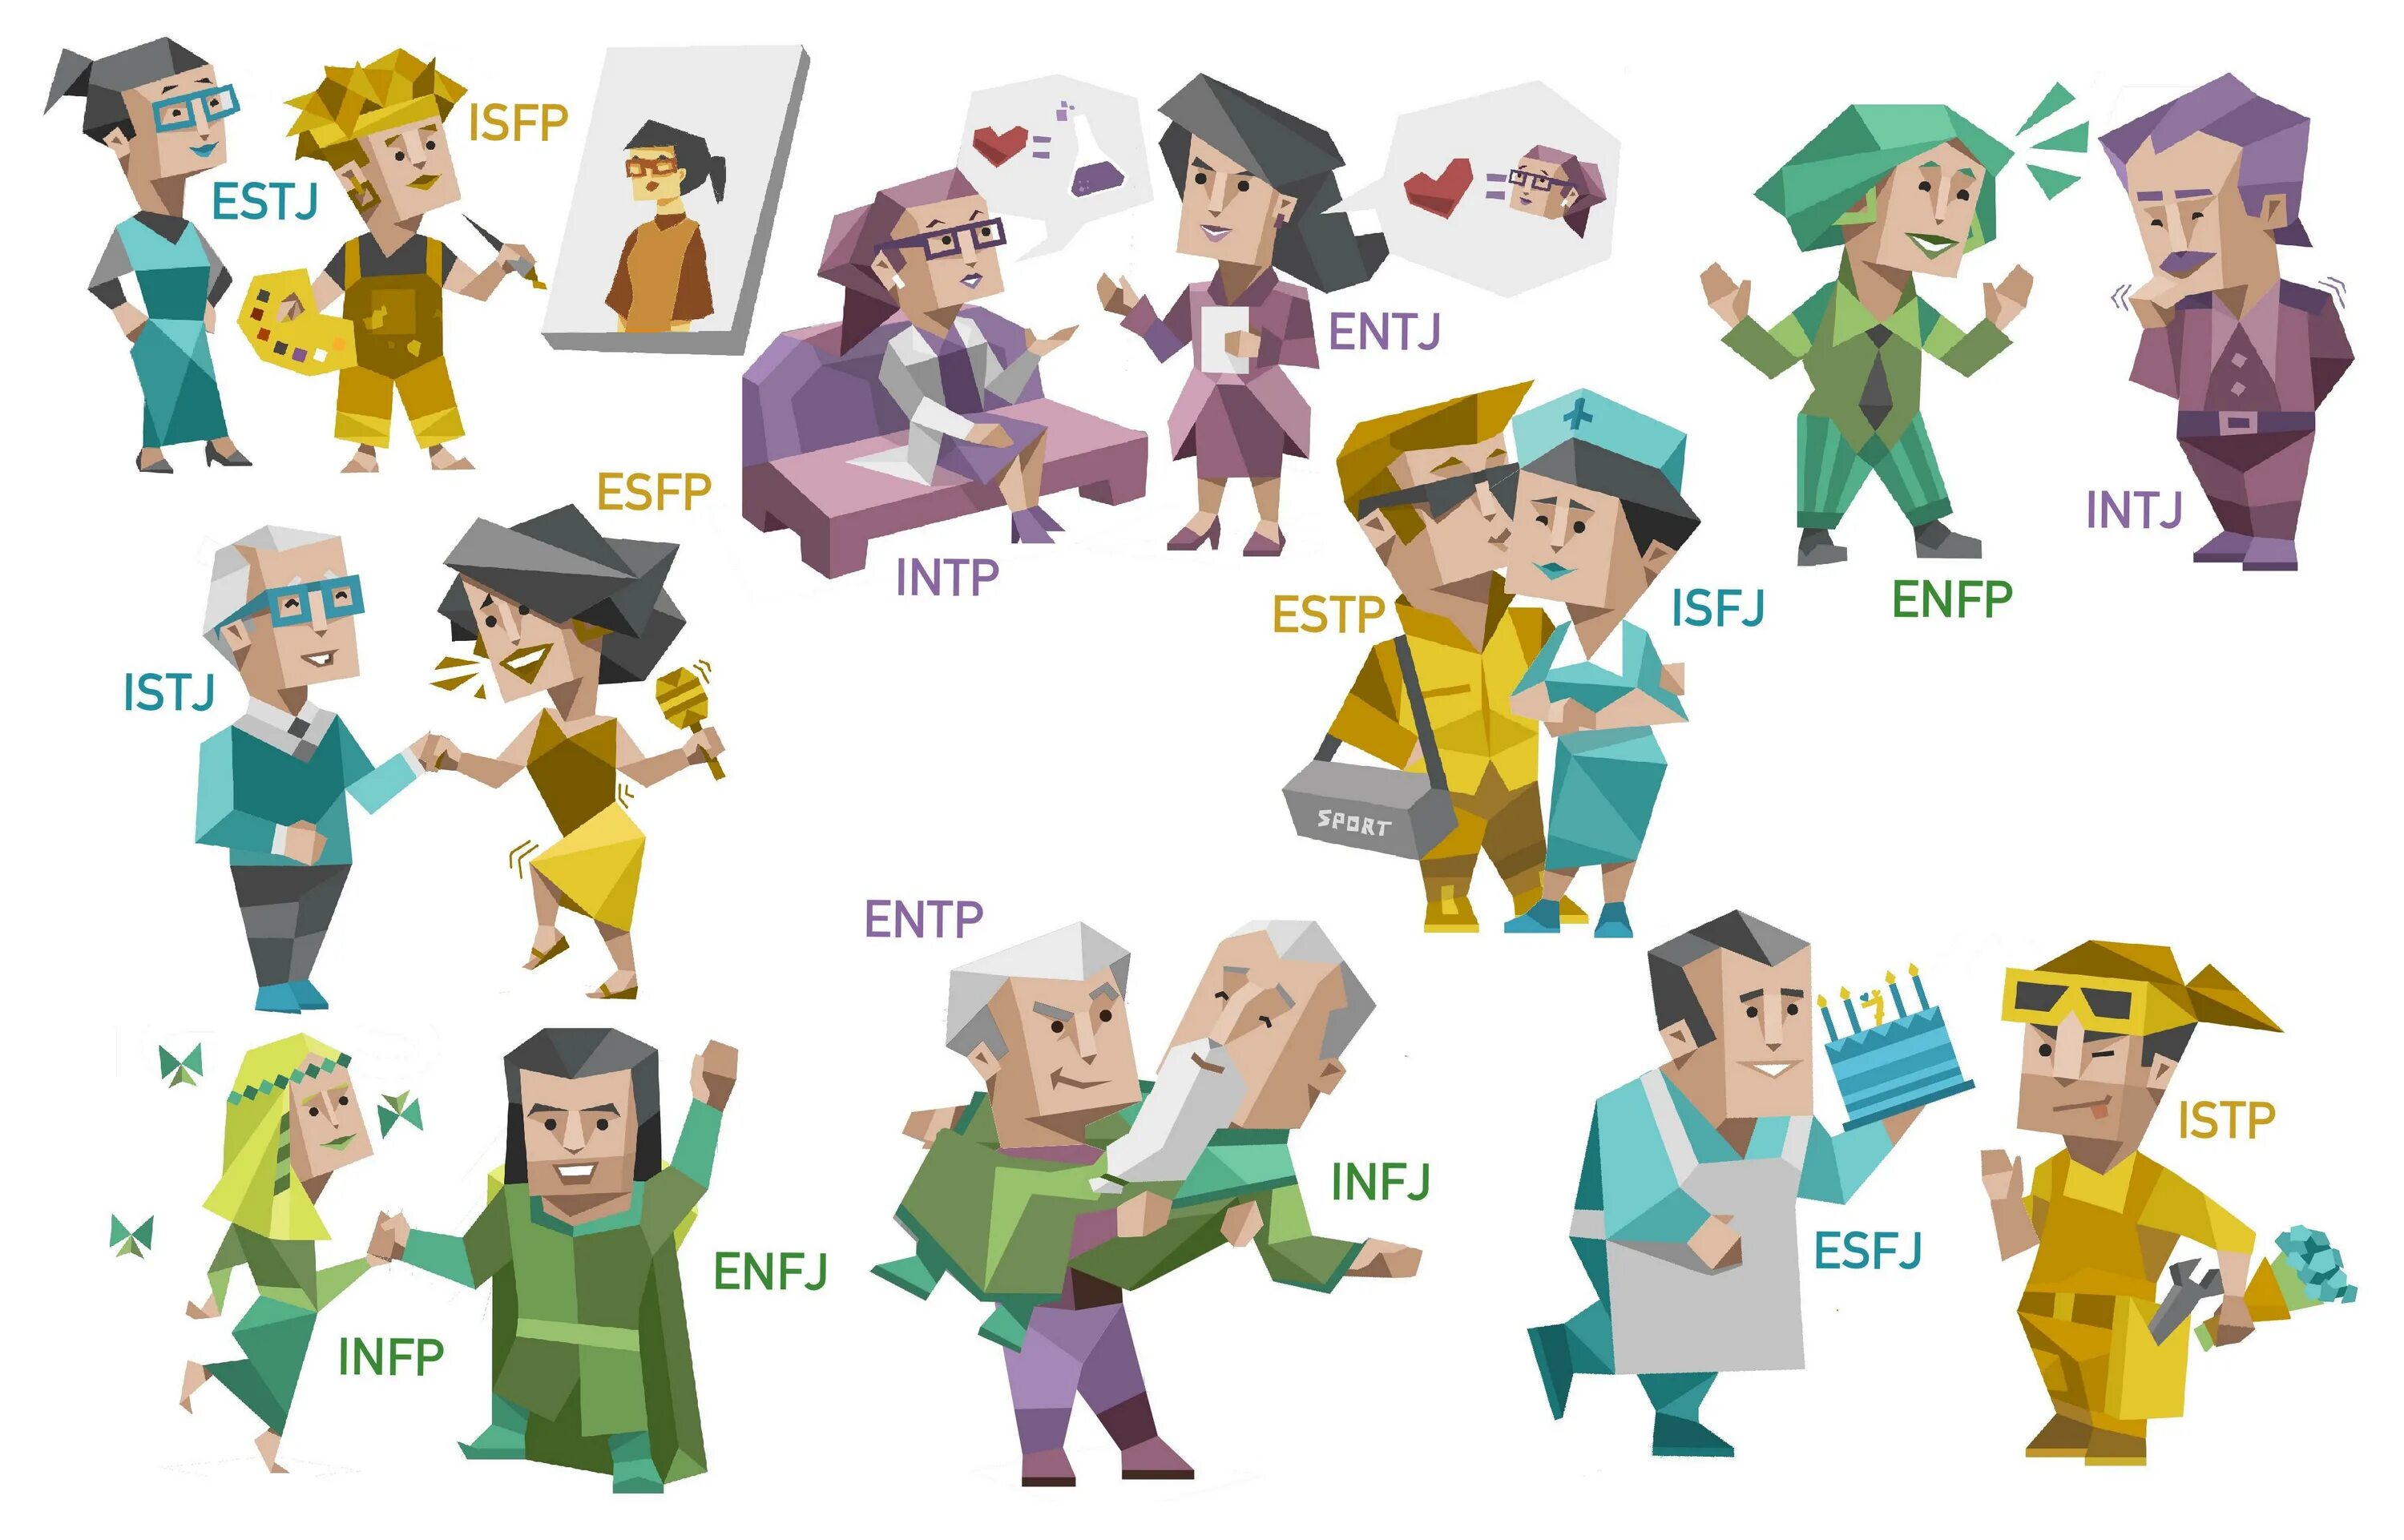 Типы личности 16 типов. MBTI персонажи ENFP. Типы личности MBTI 16 personalities. Майерс-Бриггс типы личности ENFP. ENFP Тип личности персонажи.